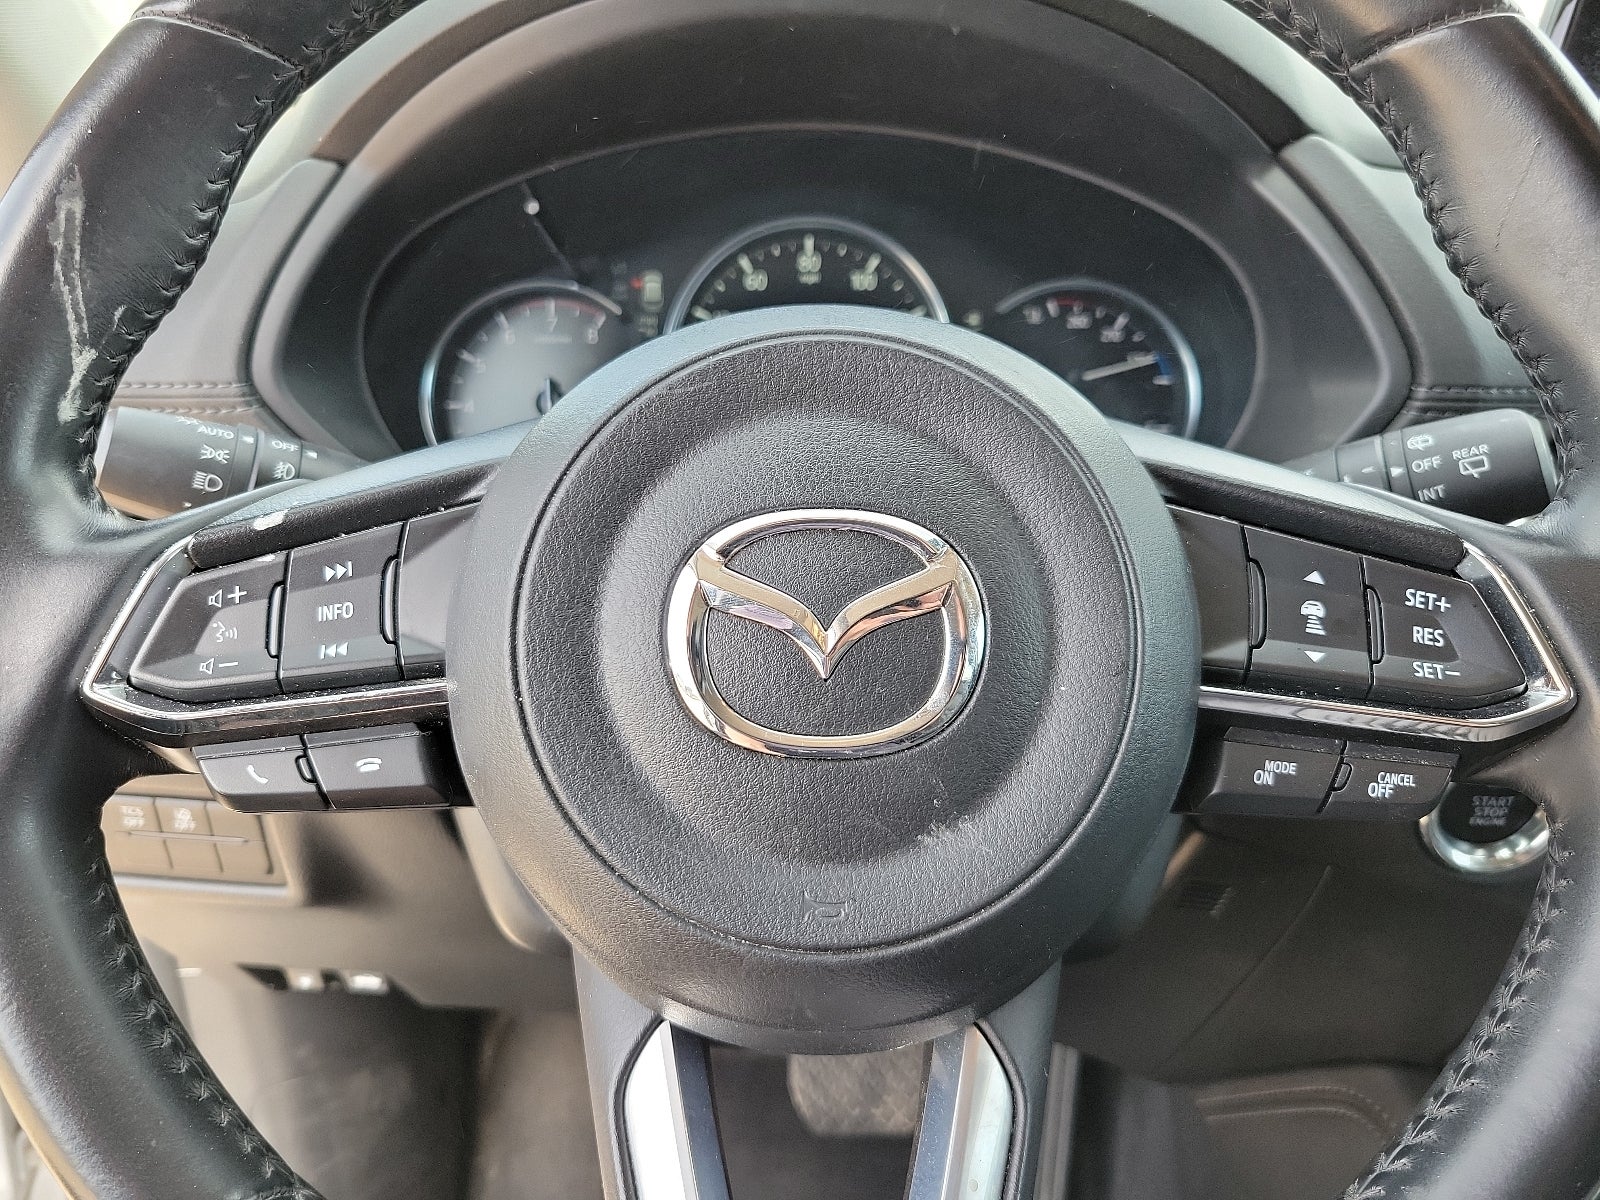 2020 Mazda Mazda CX-5 Grand Touring